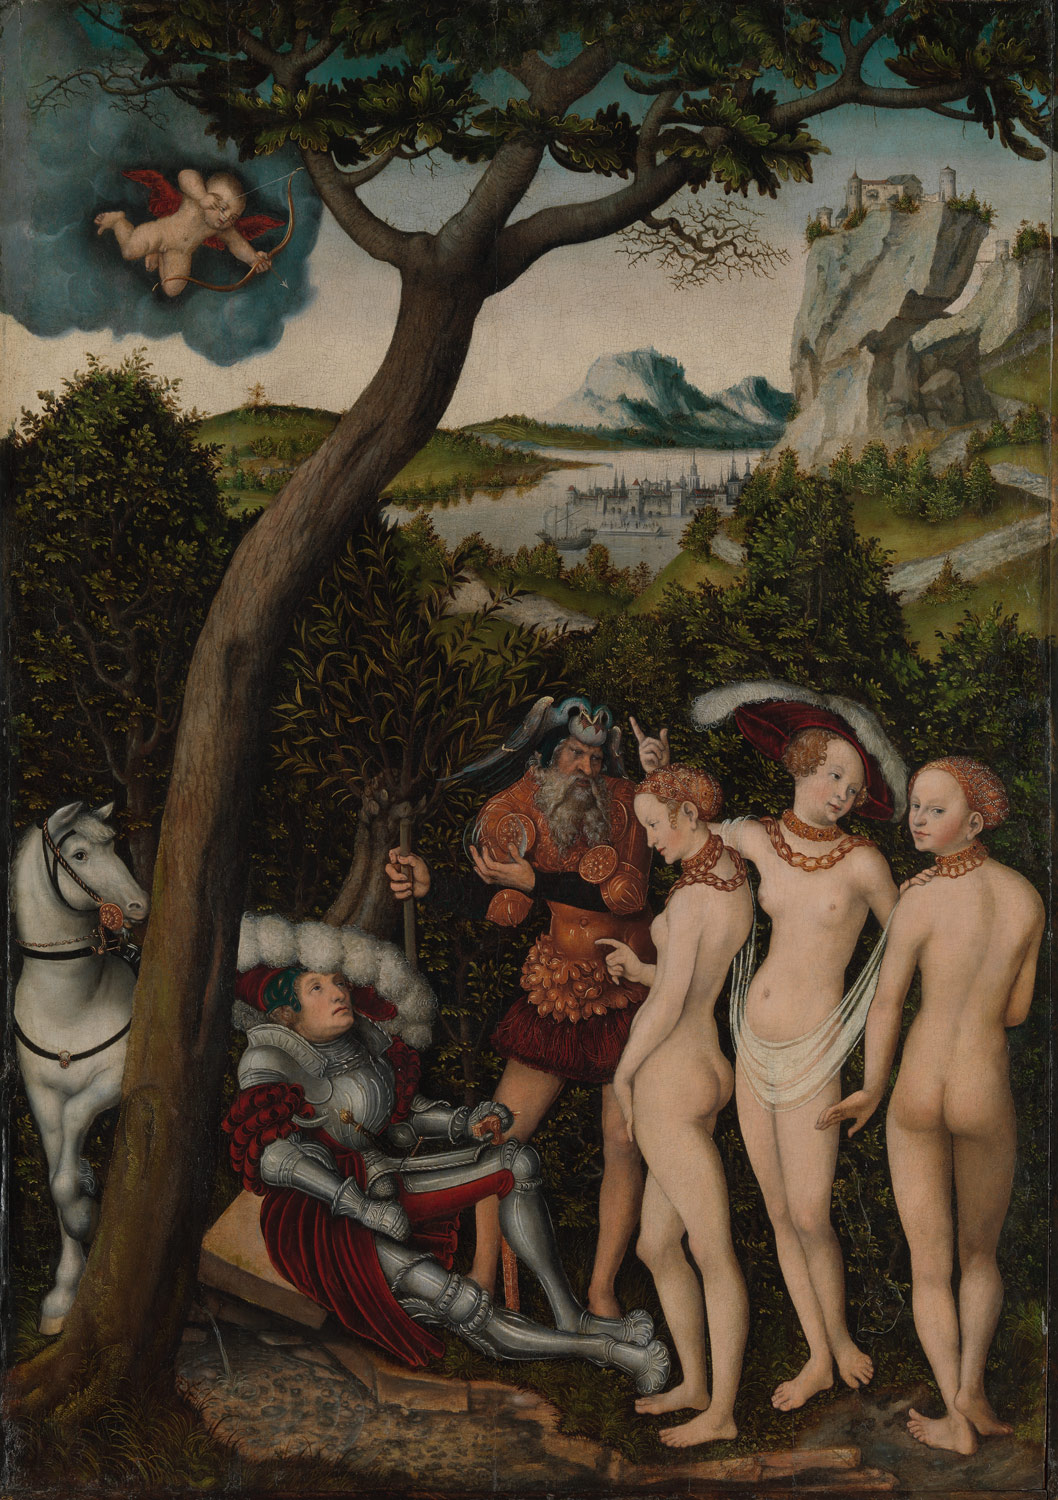 Cumshot Paintings - Renaissance Women Naked In Art - NEW PORN